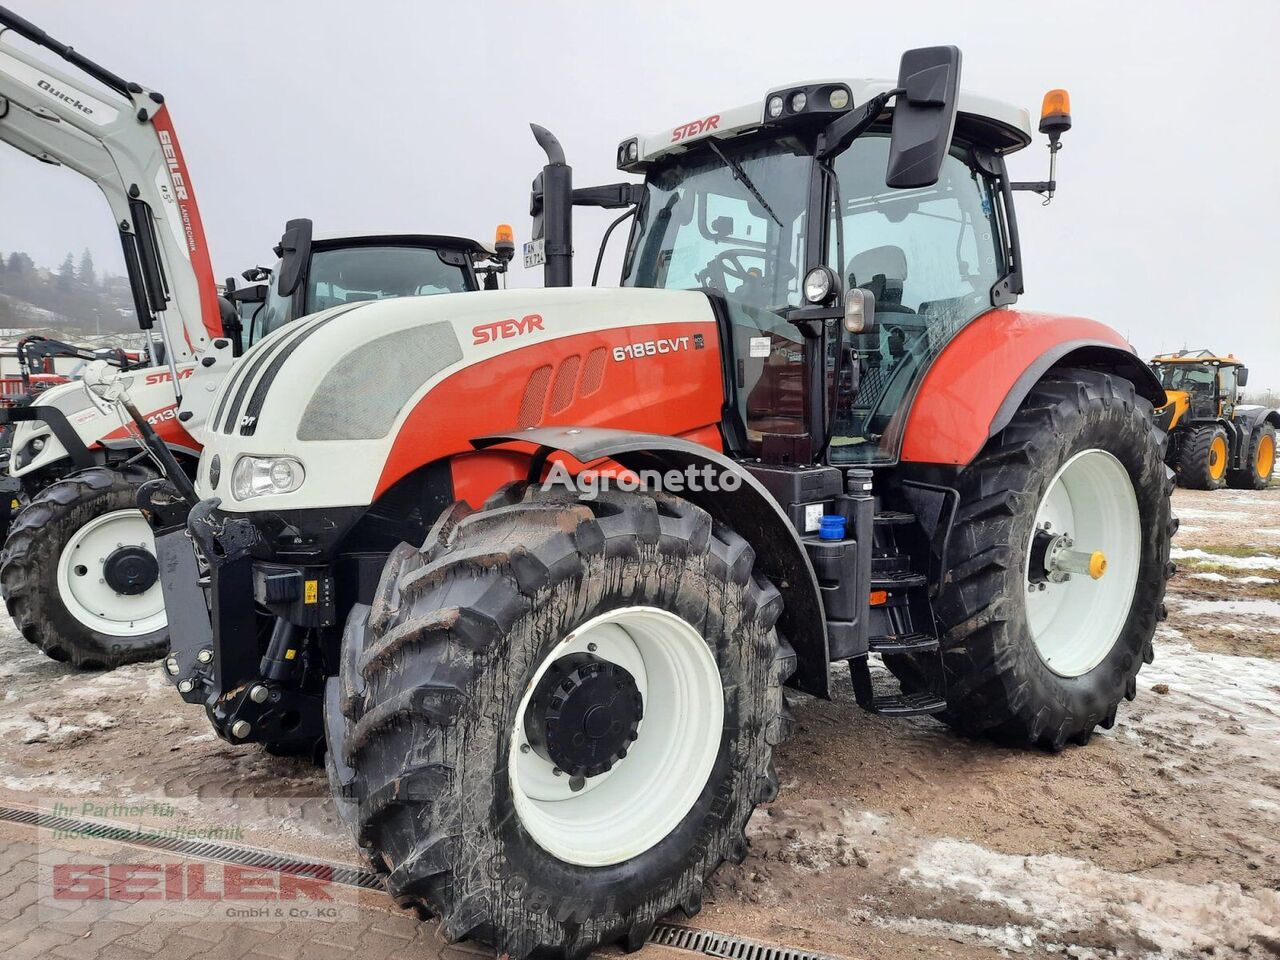 Steyr 6185 CVT wheel tractor